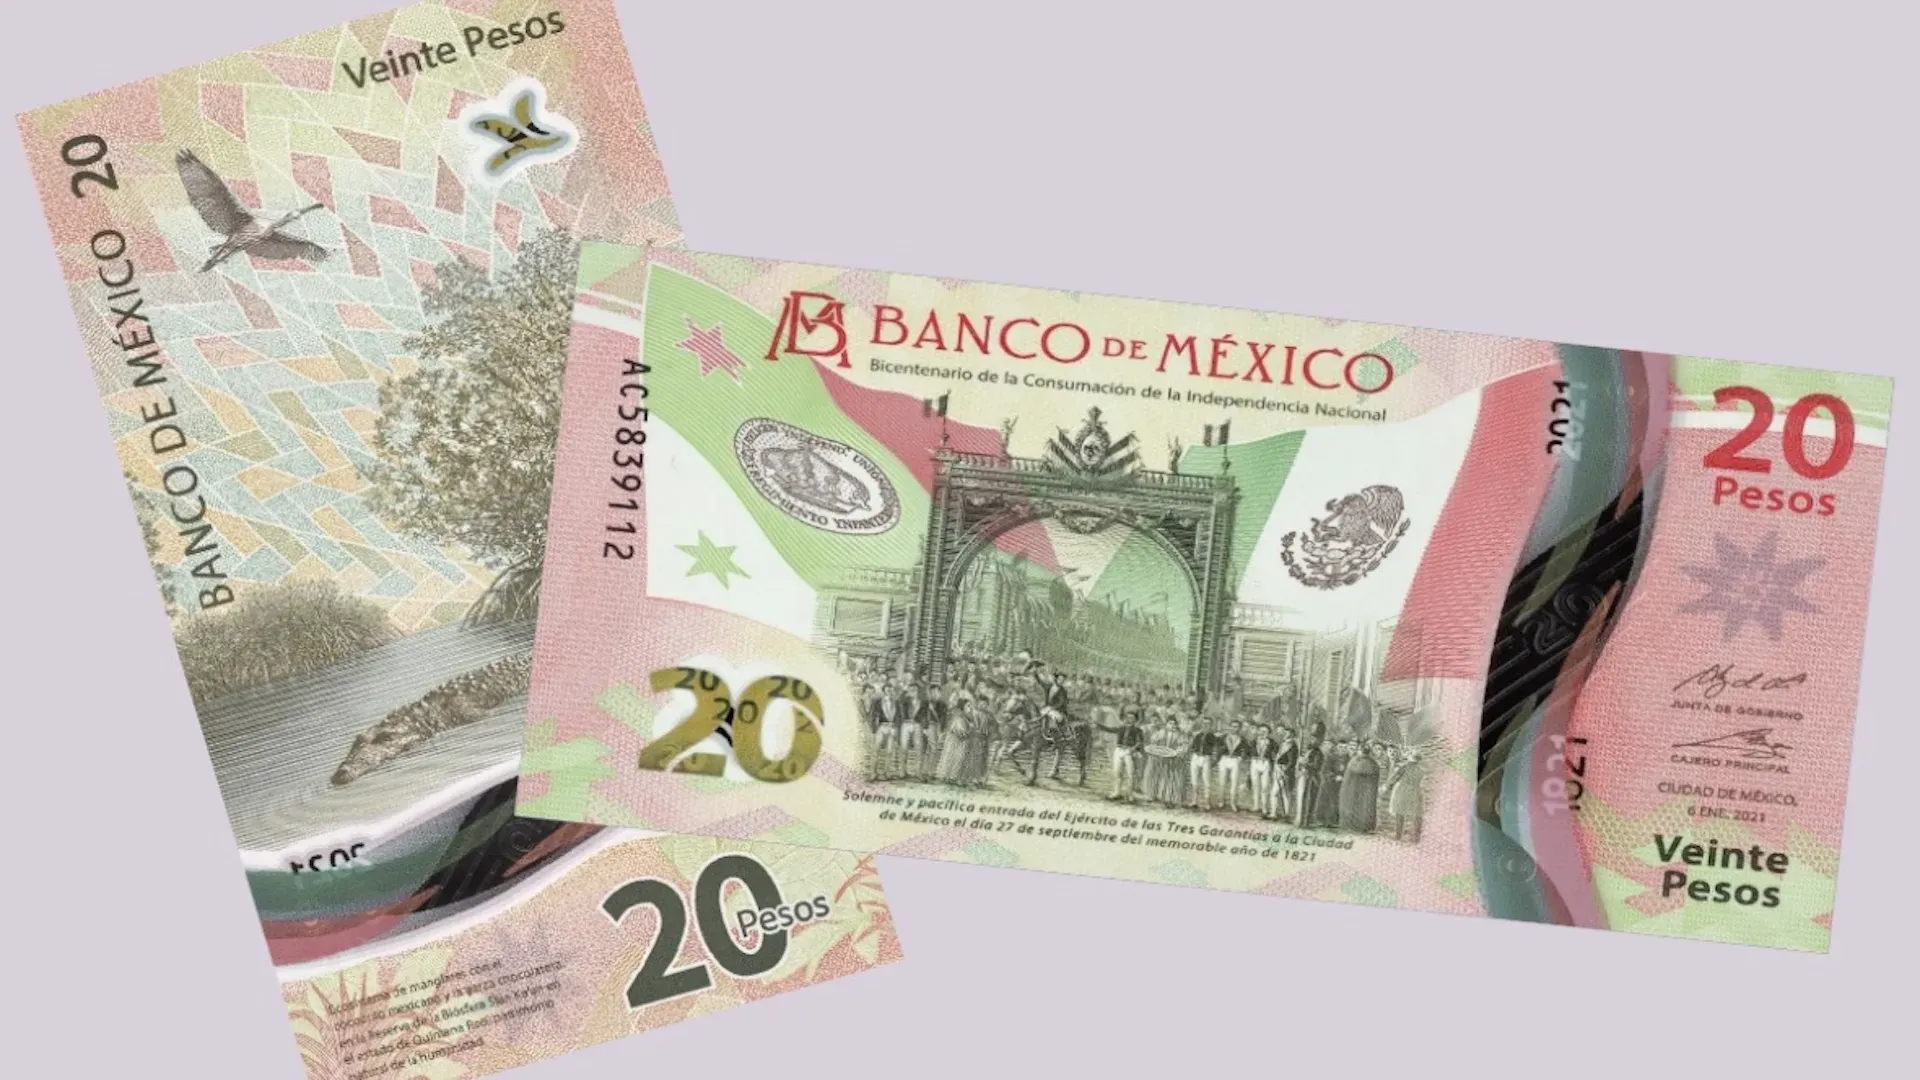 El Final de una Era: Adiós al Billete de 20 Pesos en México